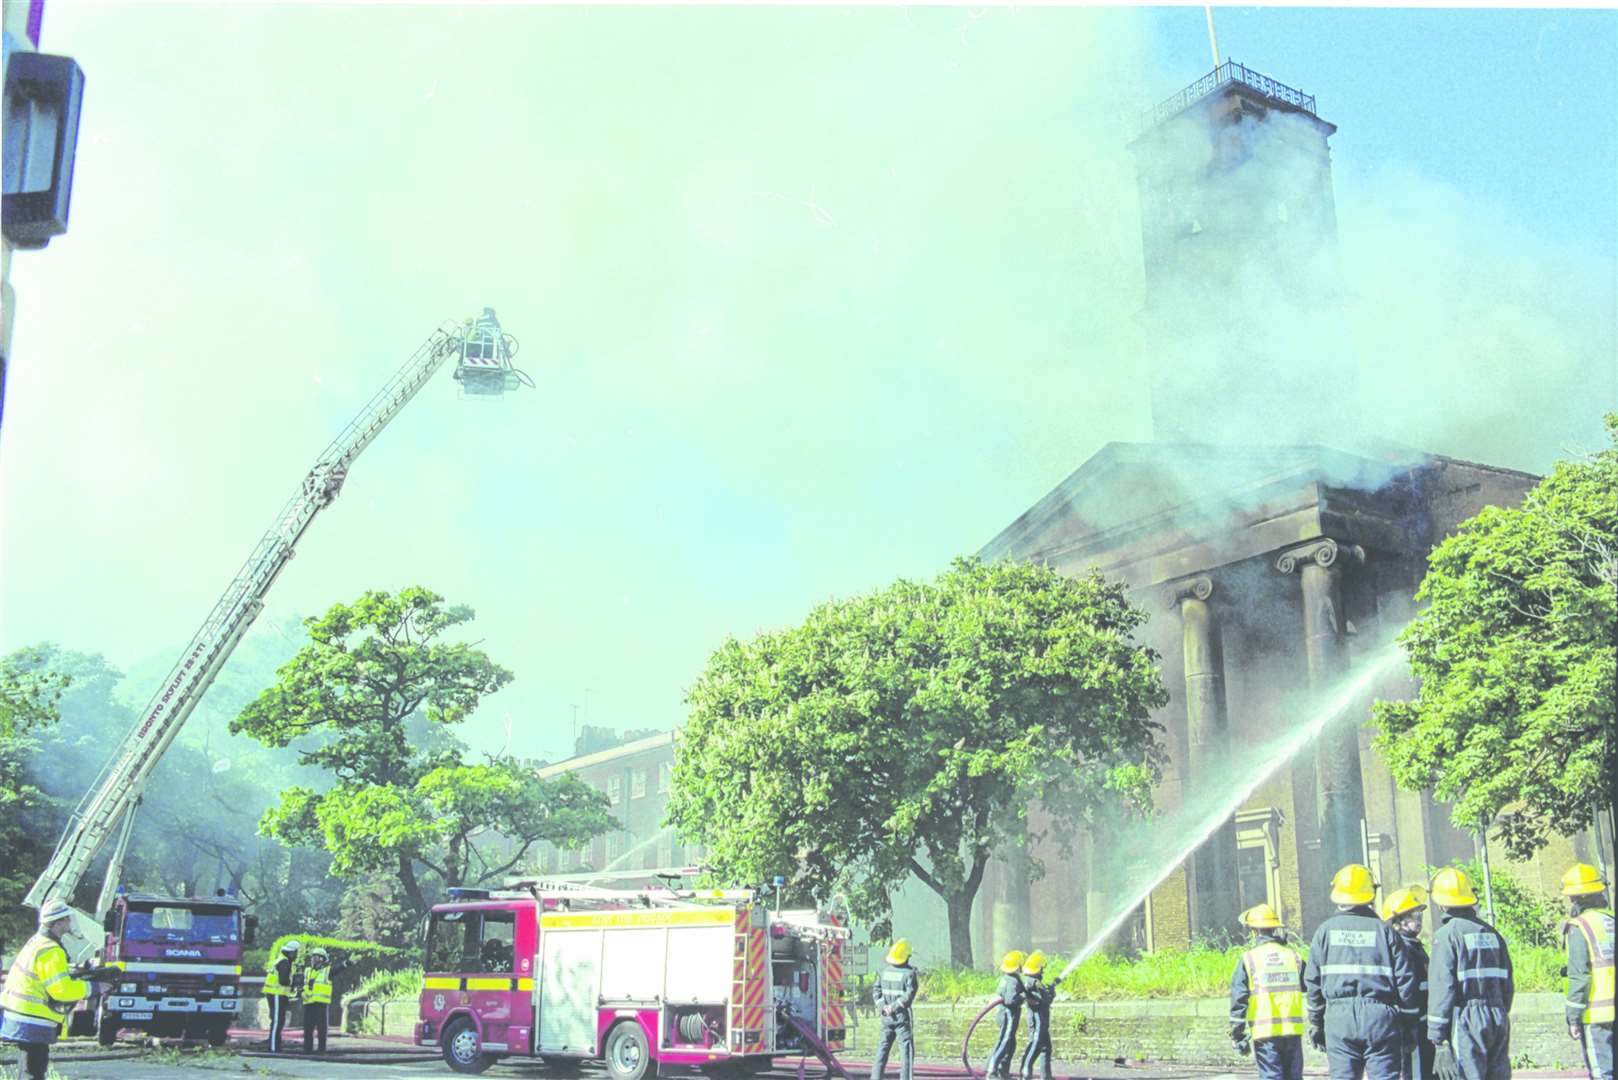 Sheerness Dockyard Church fire May 31, 2001